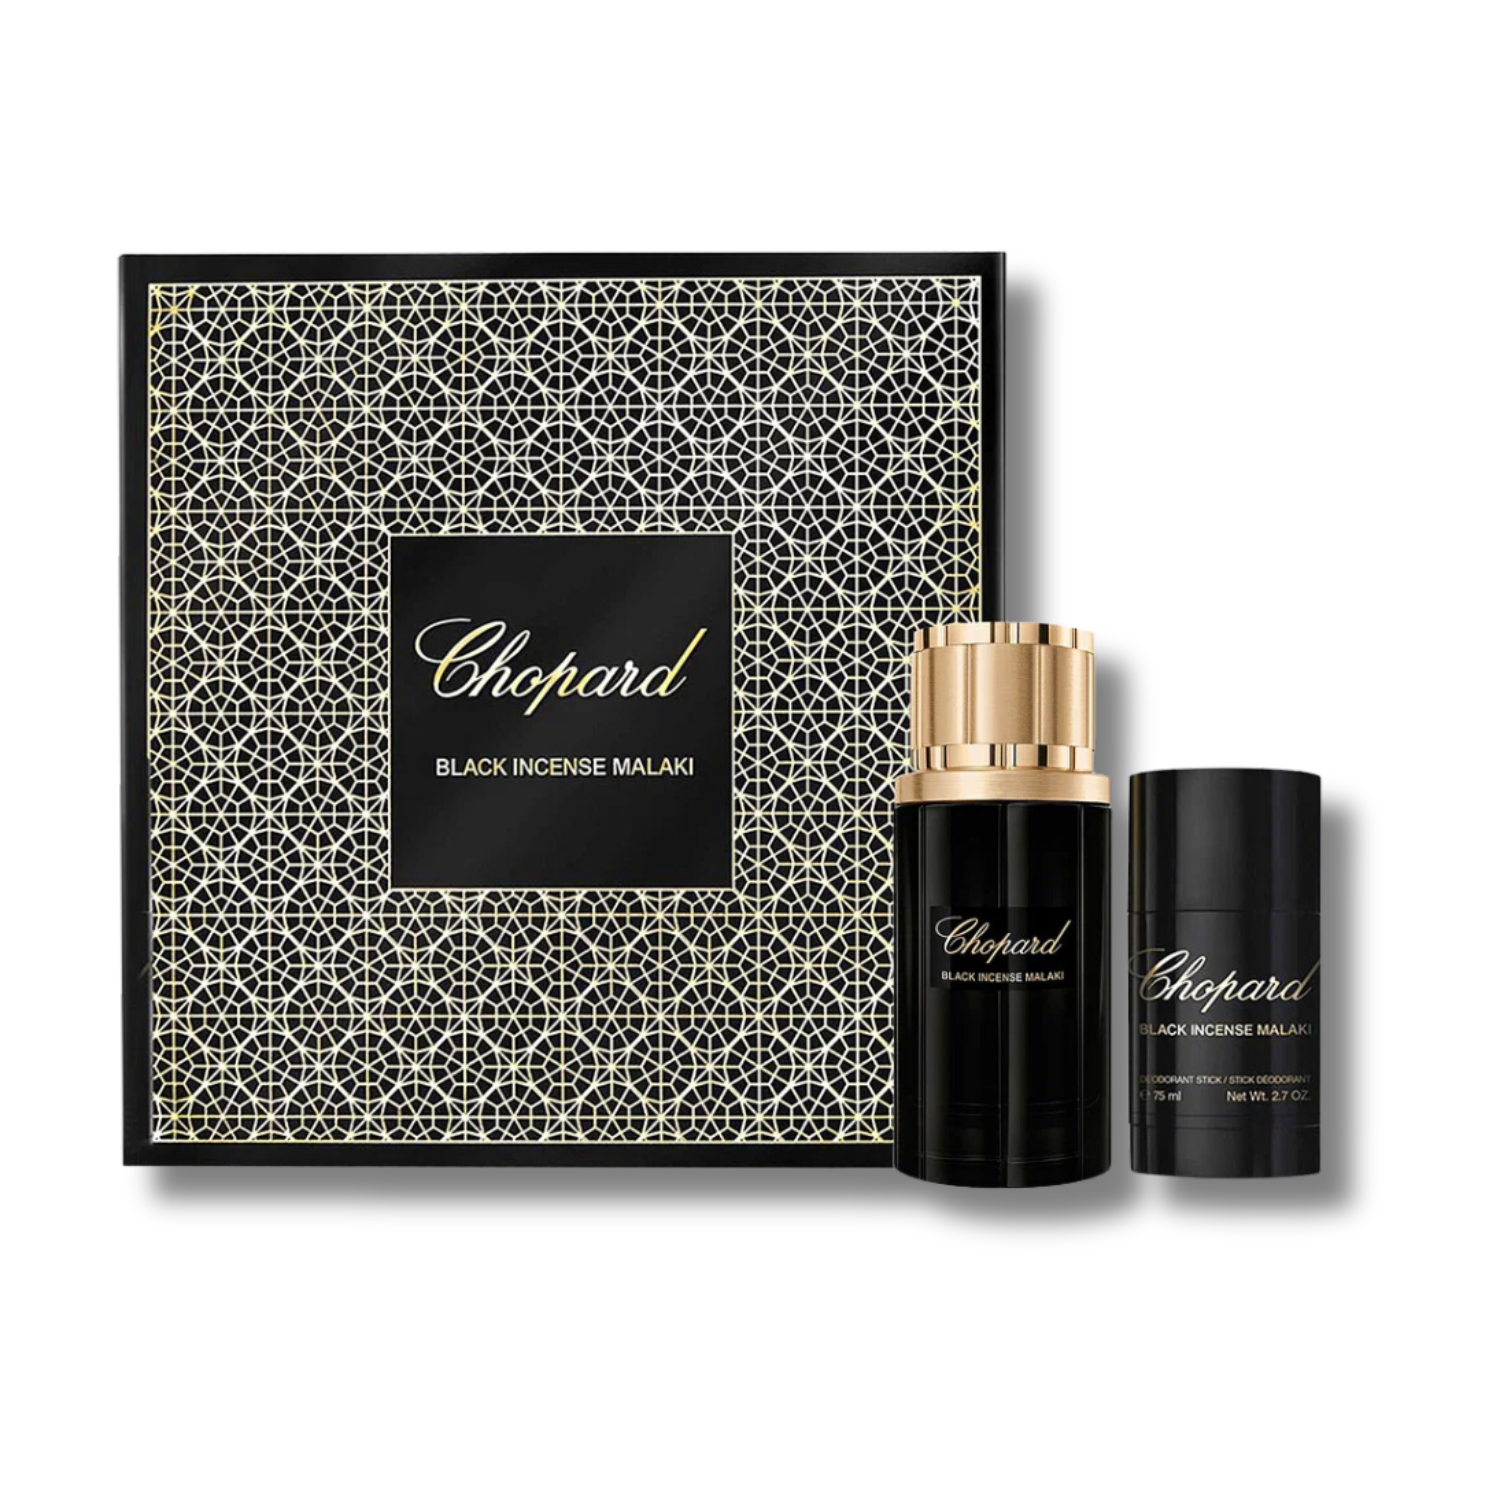 Chopard Black Incense Malaki Gift Set (80ml+75ml) Chopard